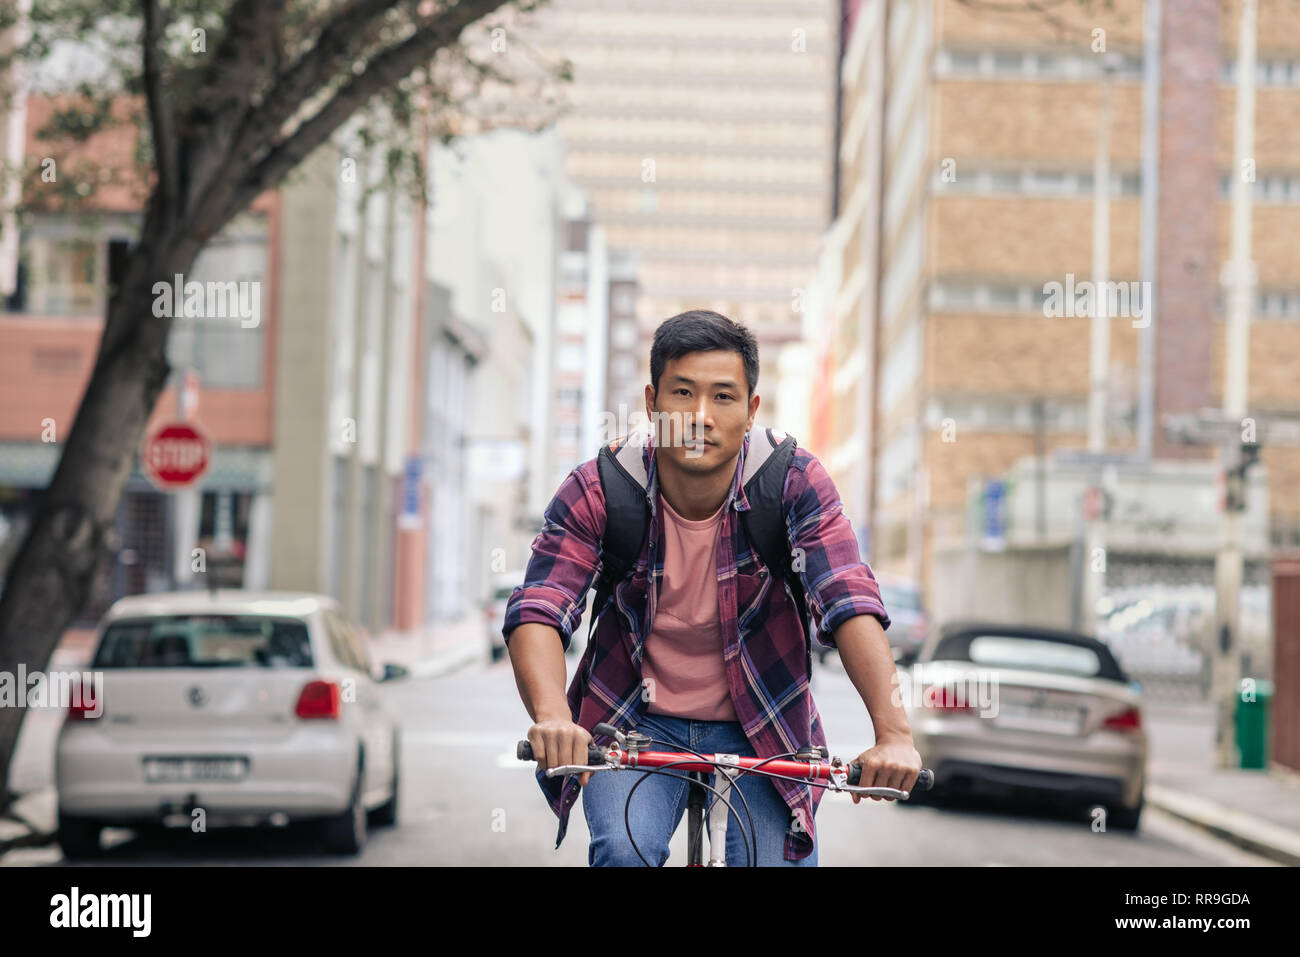 Young Asian man riding his bike through the city Stock Photo